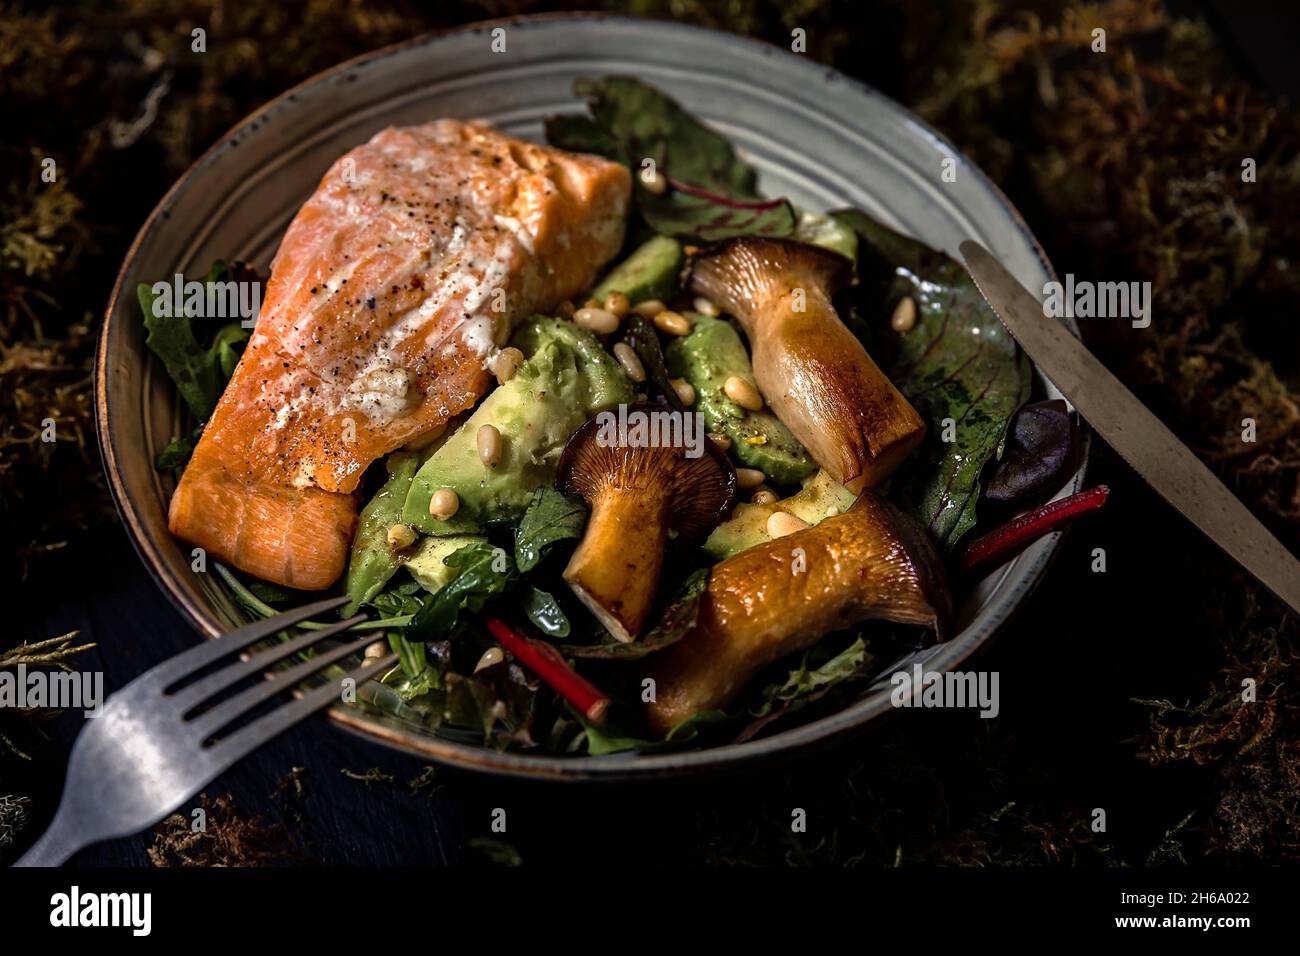 salmon and mushroom dinner meal on table Stock Photo